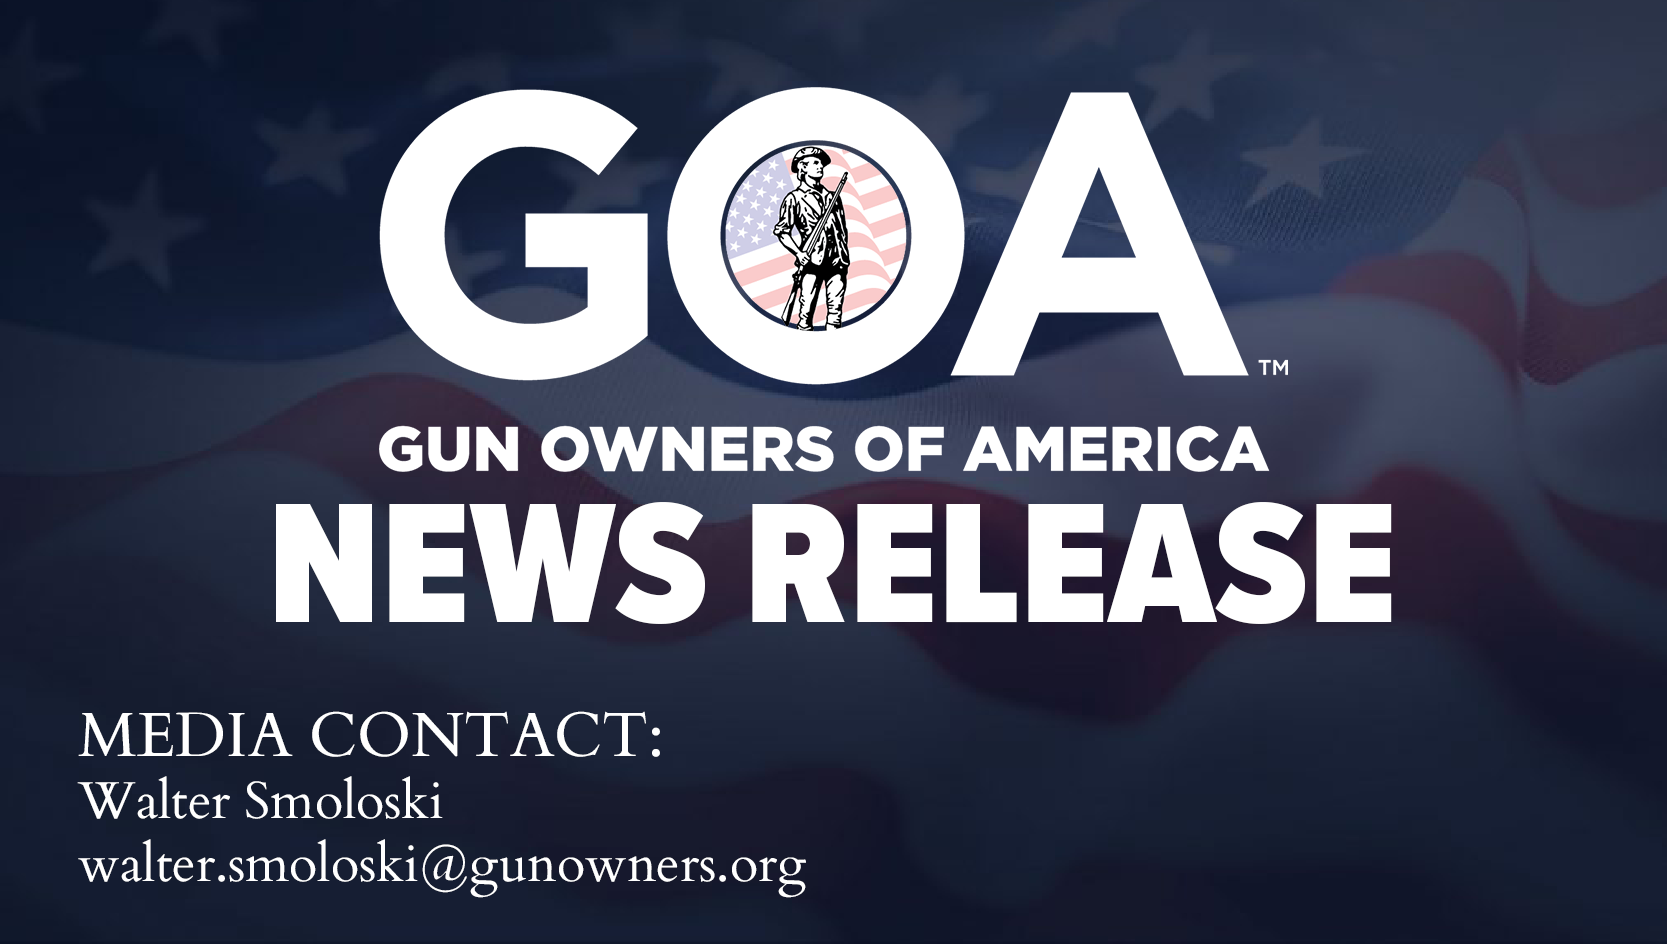 www.gunowners.org